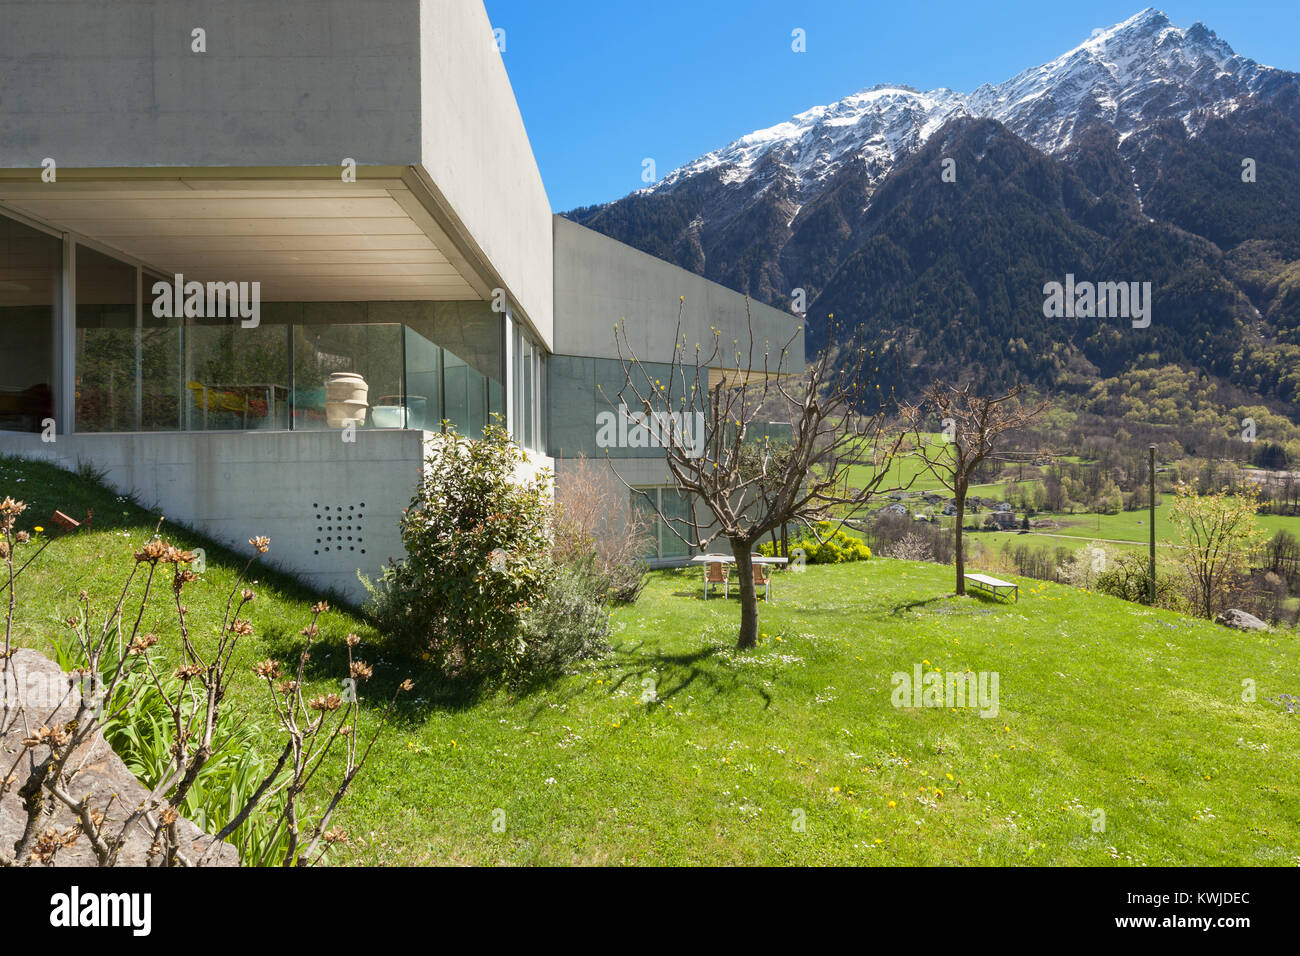 Architecture modern design, concrete house with garden Stock Photo